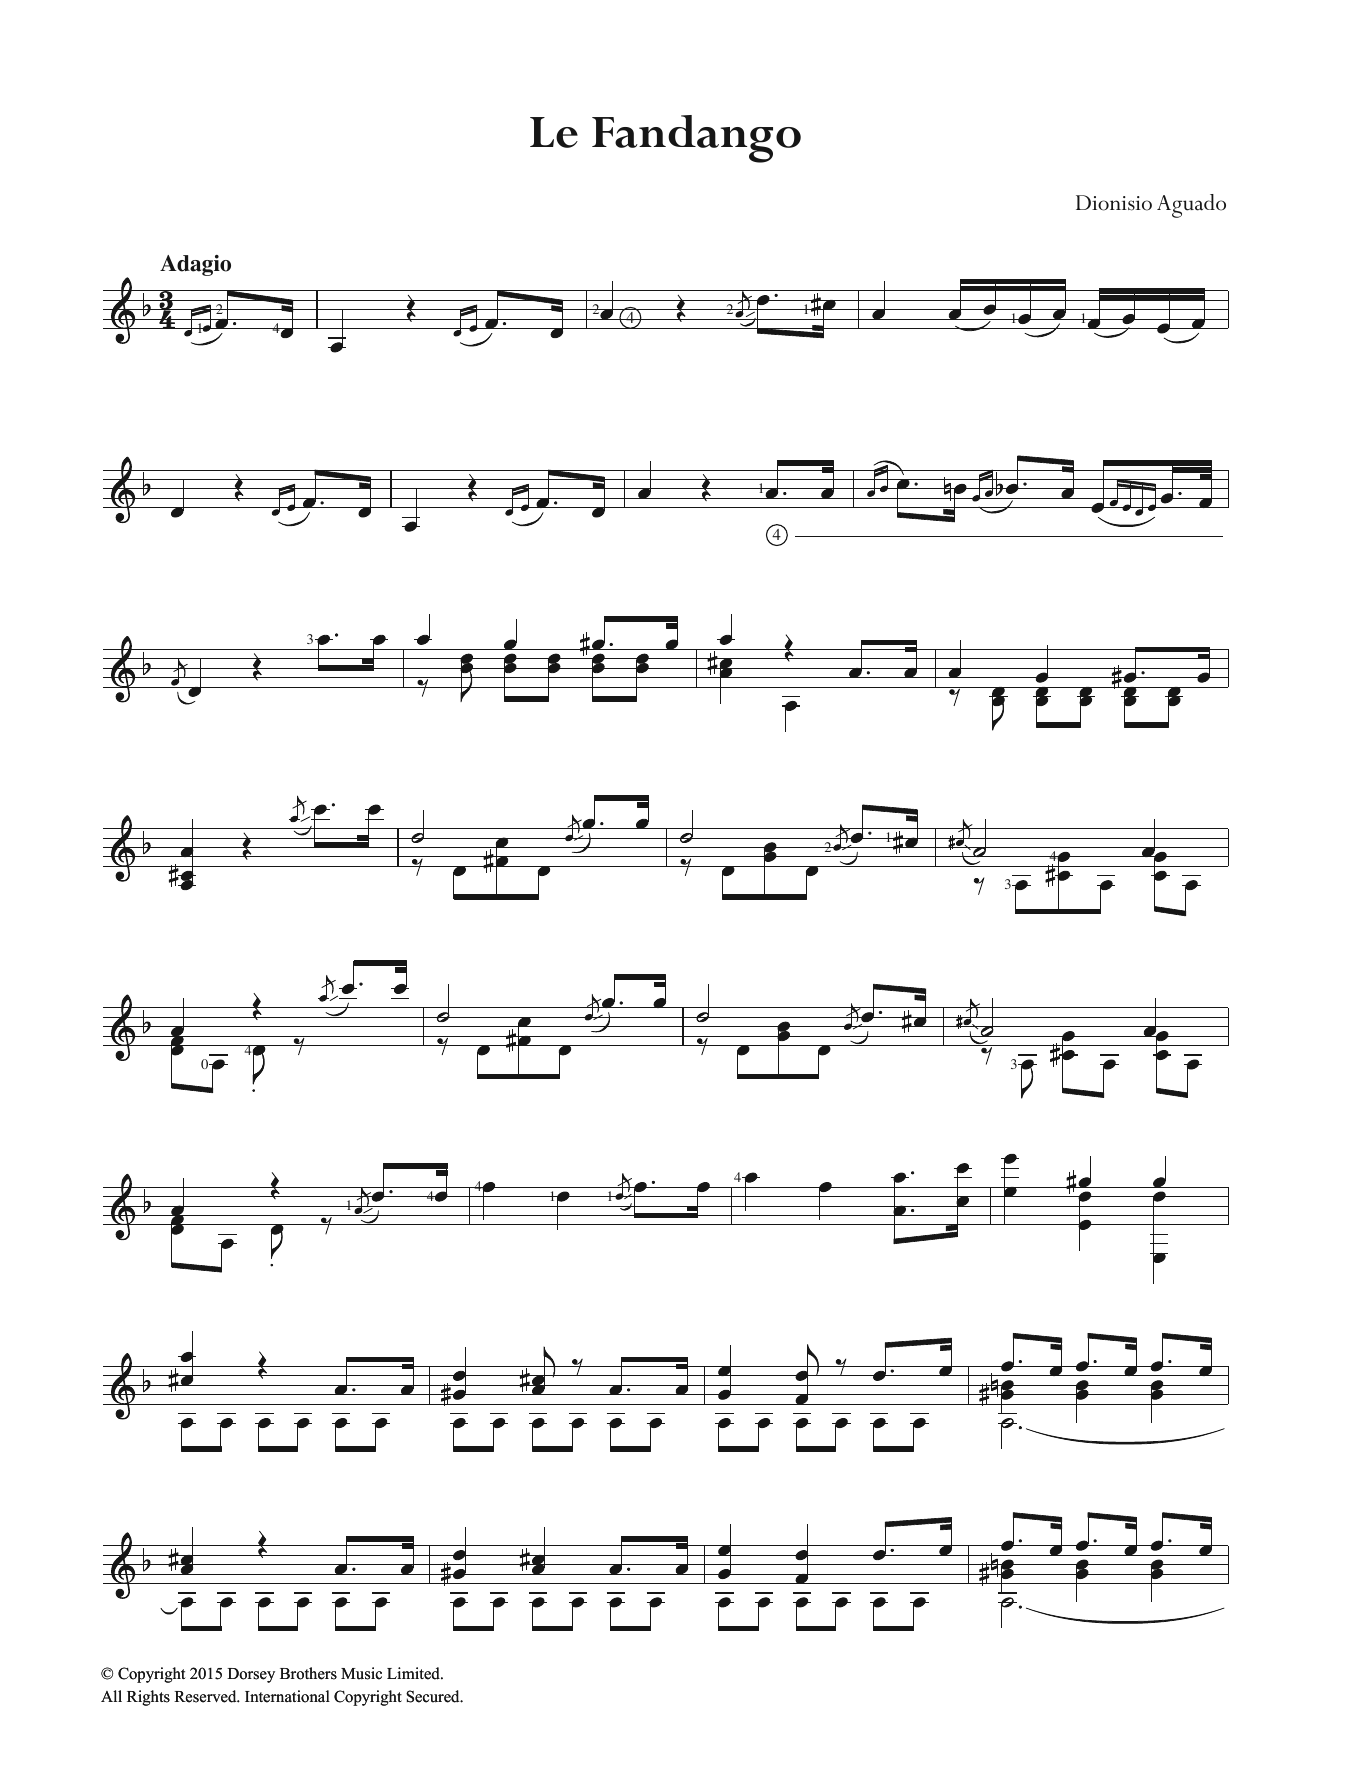 Dionisio Aguado Le Fandango Sheet Music Notes & Chords for Guitar - Download or Print PDF